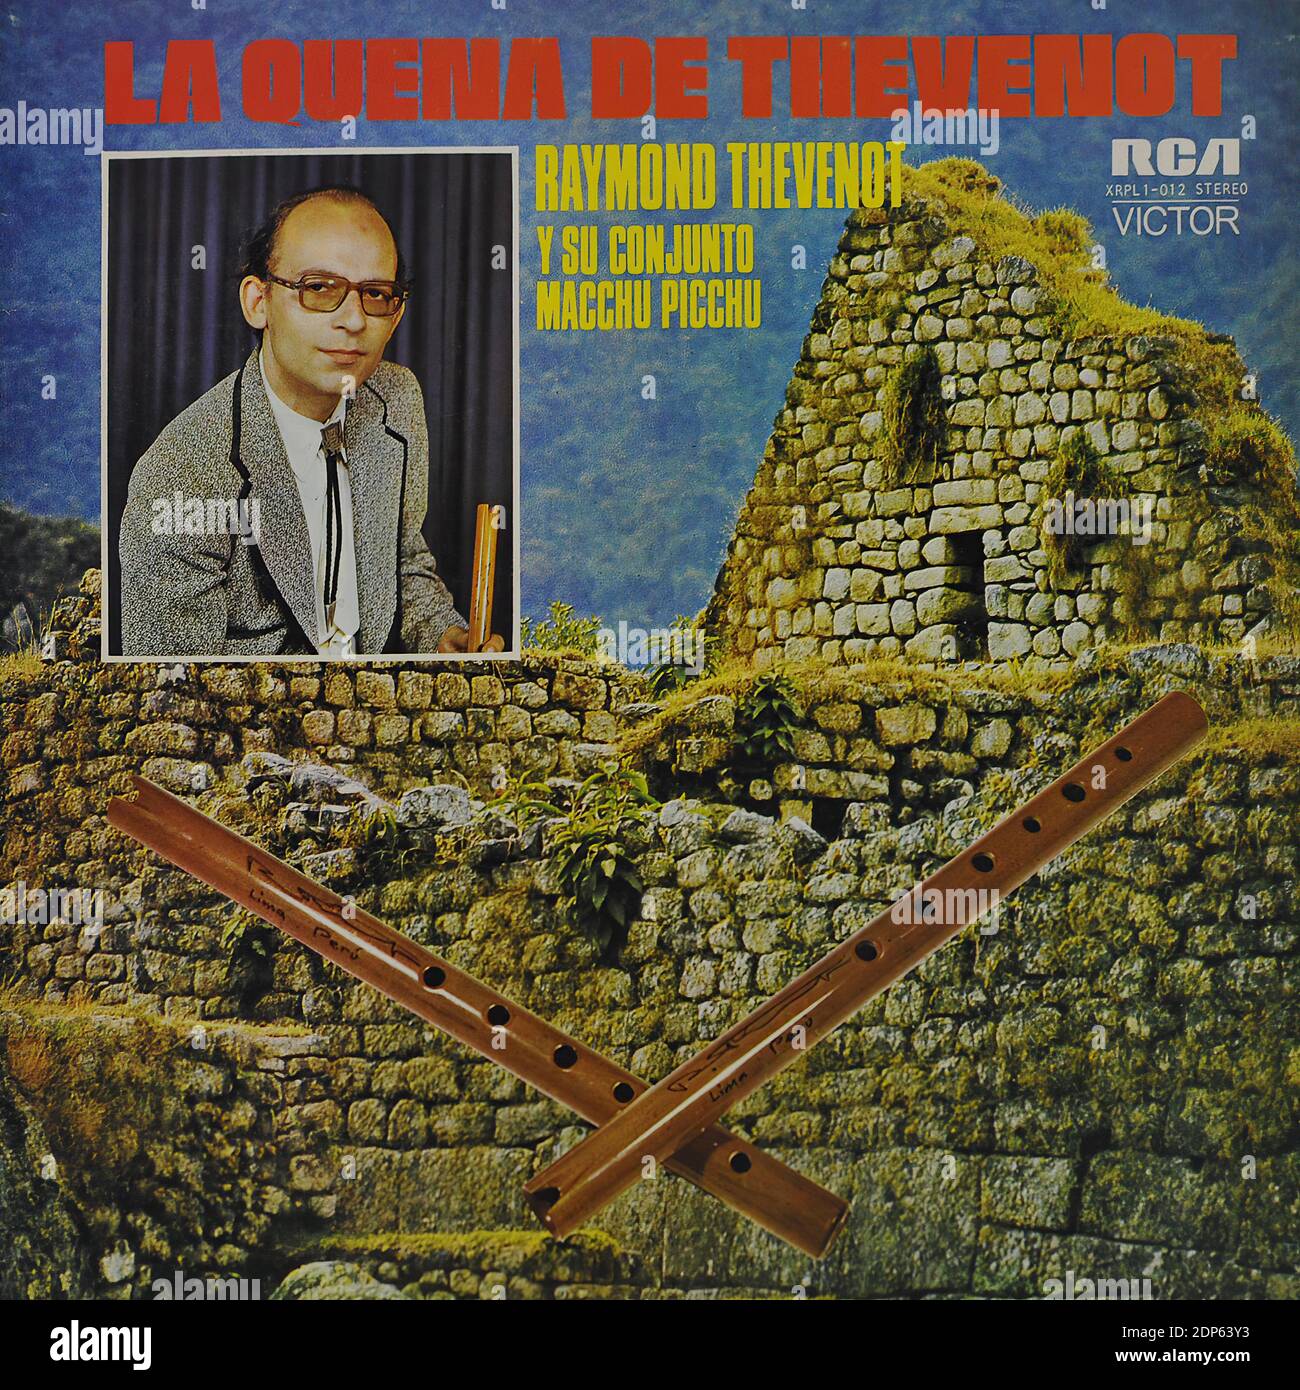 RAYMOND THEVENOT Y MACCHU PICCHU LA QUENA DE THEVENOT - Vintage Vinyl  Record Cover Stock Photo - Alamy